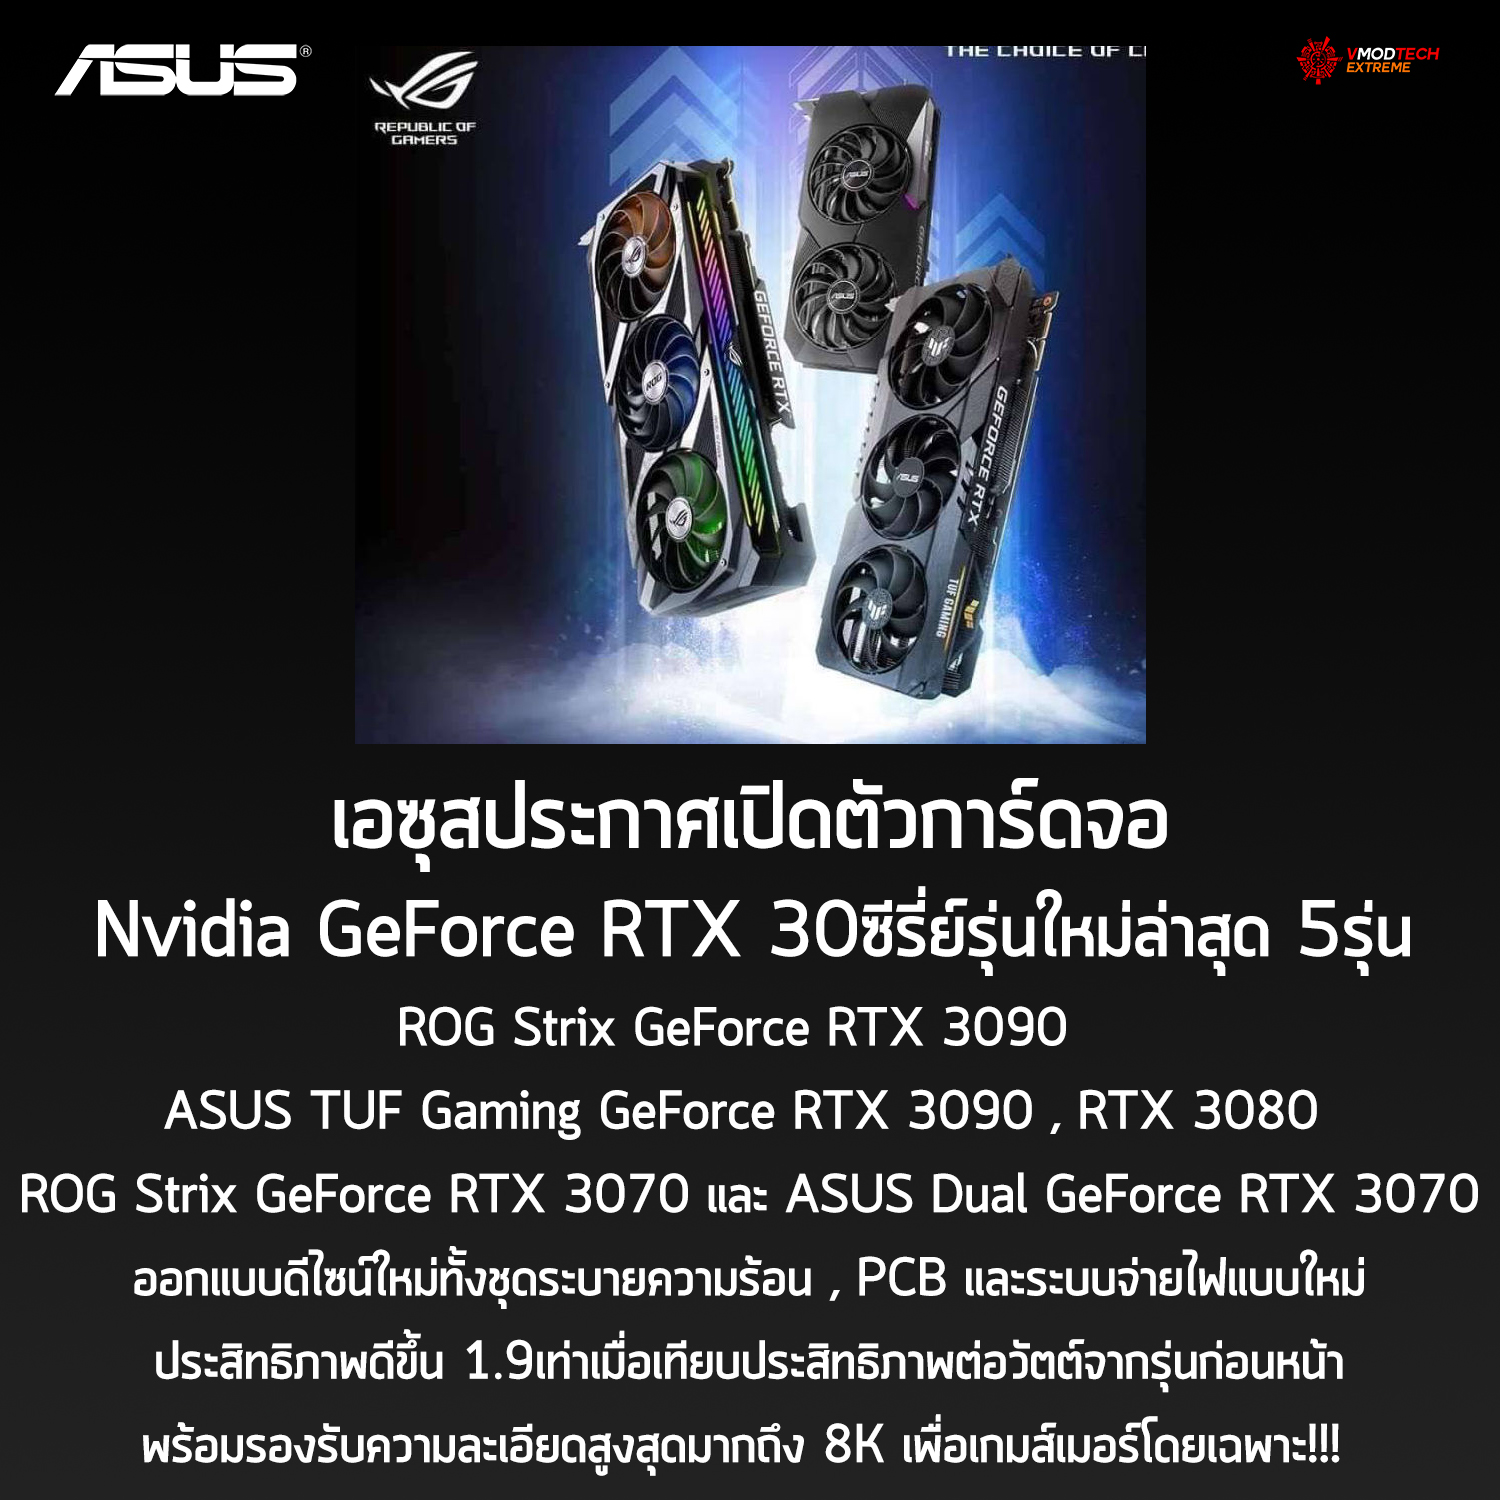 asus nvidia geforce rtx 30 series rog strix geforce rtx 3090 asus tuf gaming geforce rtx 3090 geforce rtx 3080 rog strix geforce rtx 3070 asus dual geforce rtx 3070 เอซุสประกาศเปิดตัวการ์ดจอ Nvidia GeForce RTX 30ซีรี่ย์รุ่นใหม่ล่าสุด 5รุ่น ROG Strix GeForce RTX 3090 , ASUS TUF Gaming GeForce RTX 3090 , GeForce RTX 3080 , ROG Strix GeForce RTX 3070 และ ASUS Dual GeForce RTX 3070 อย่างเป็นทางการ